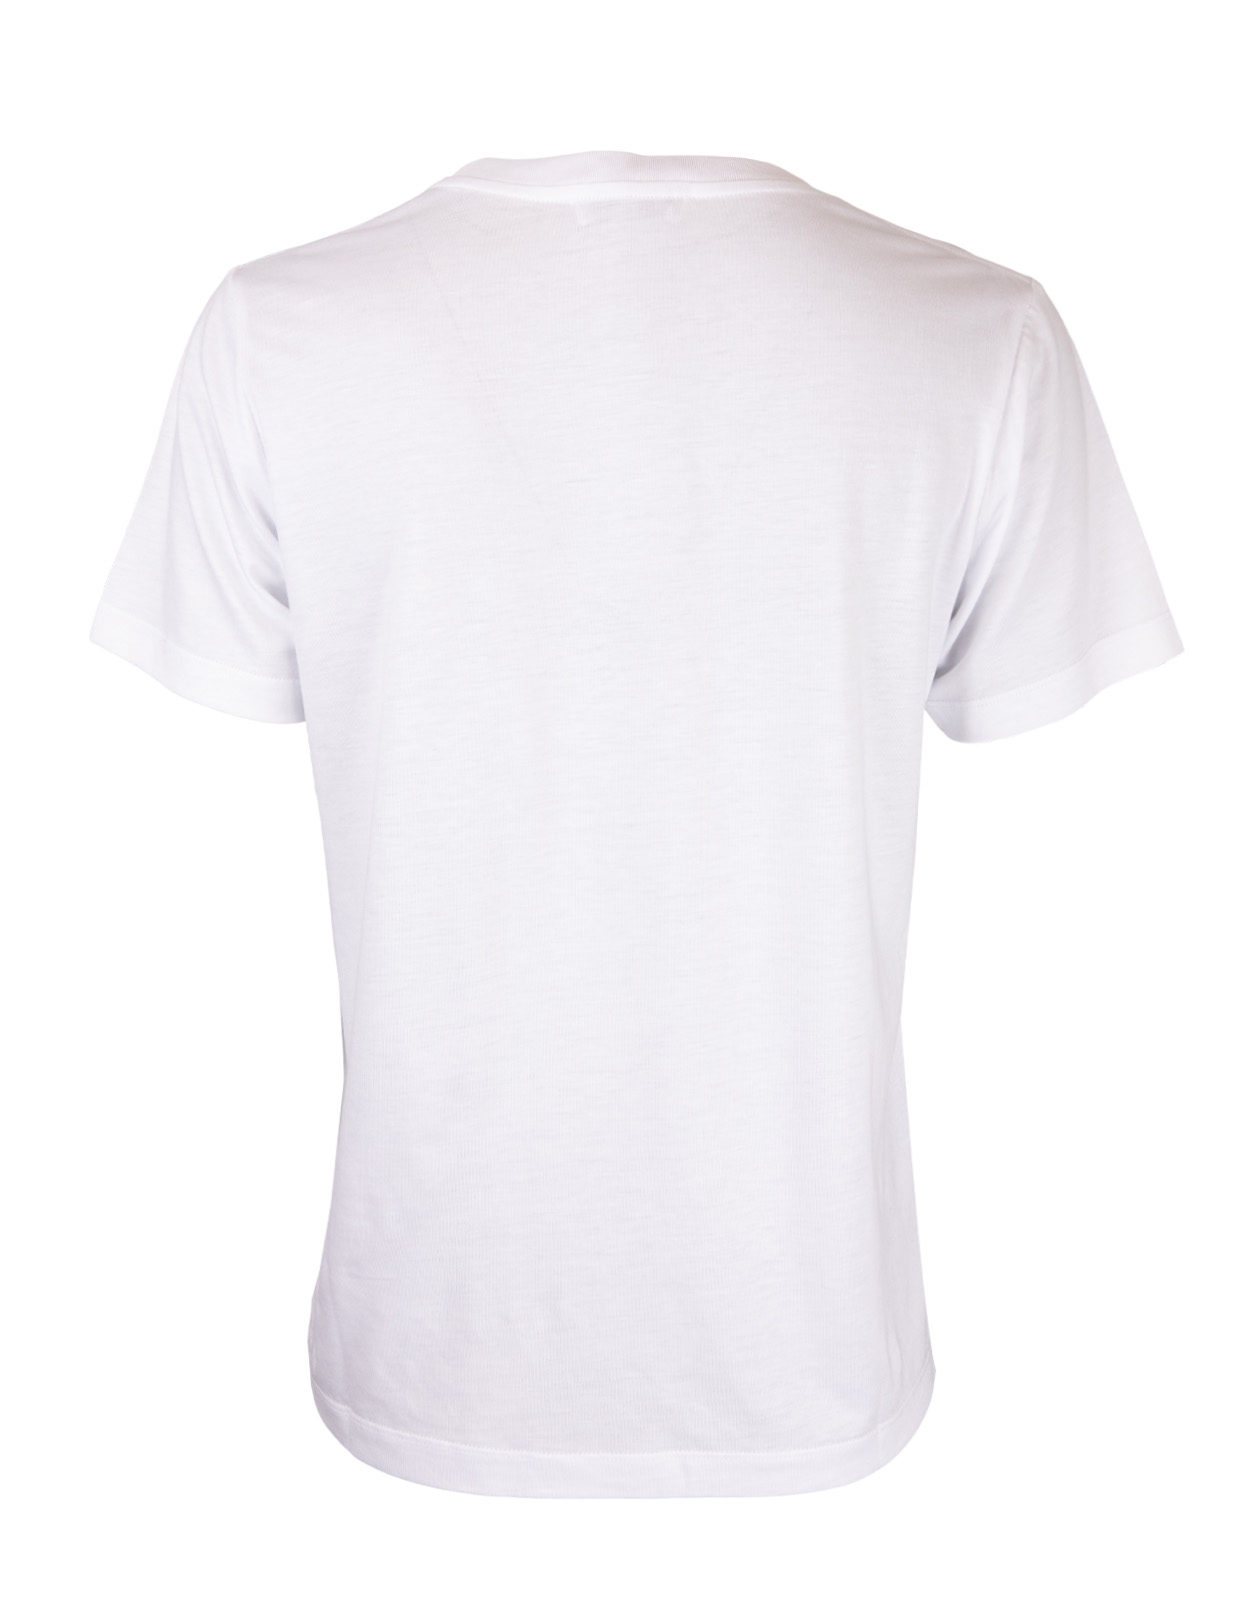 T-shirt Ninja White Stl XL